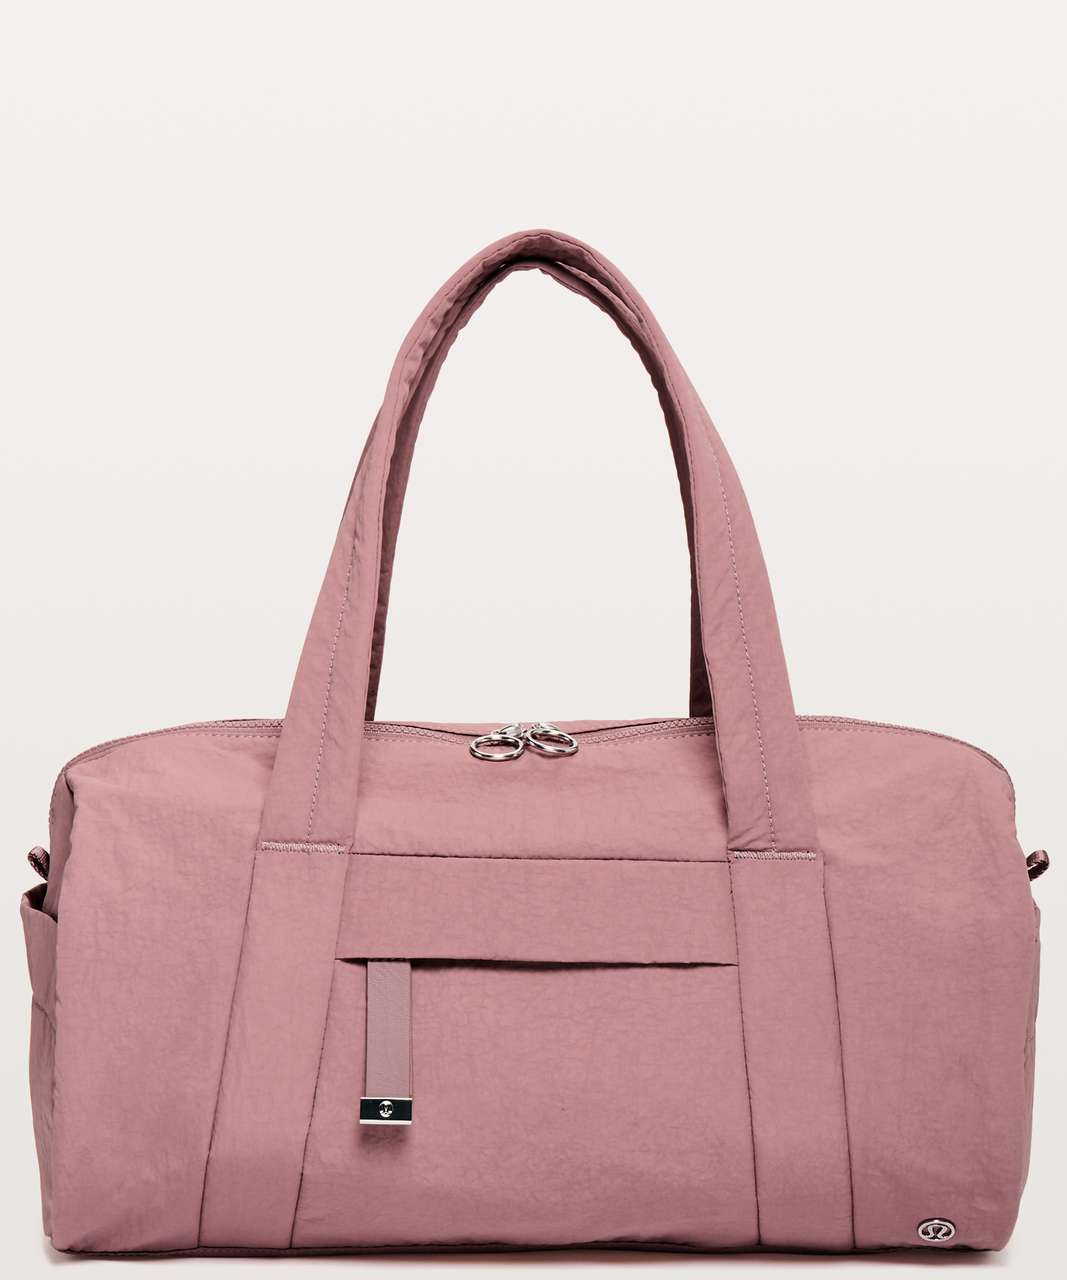 lululemon pink bag